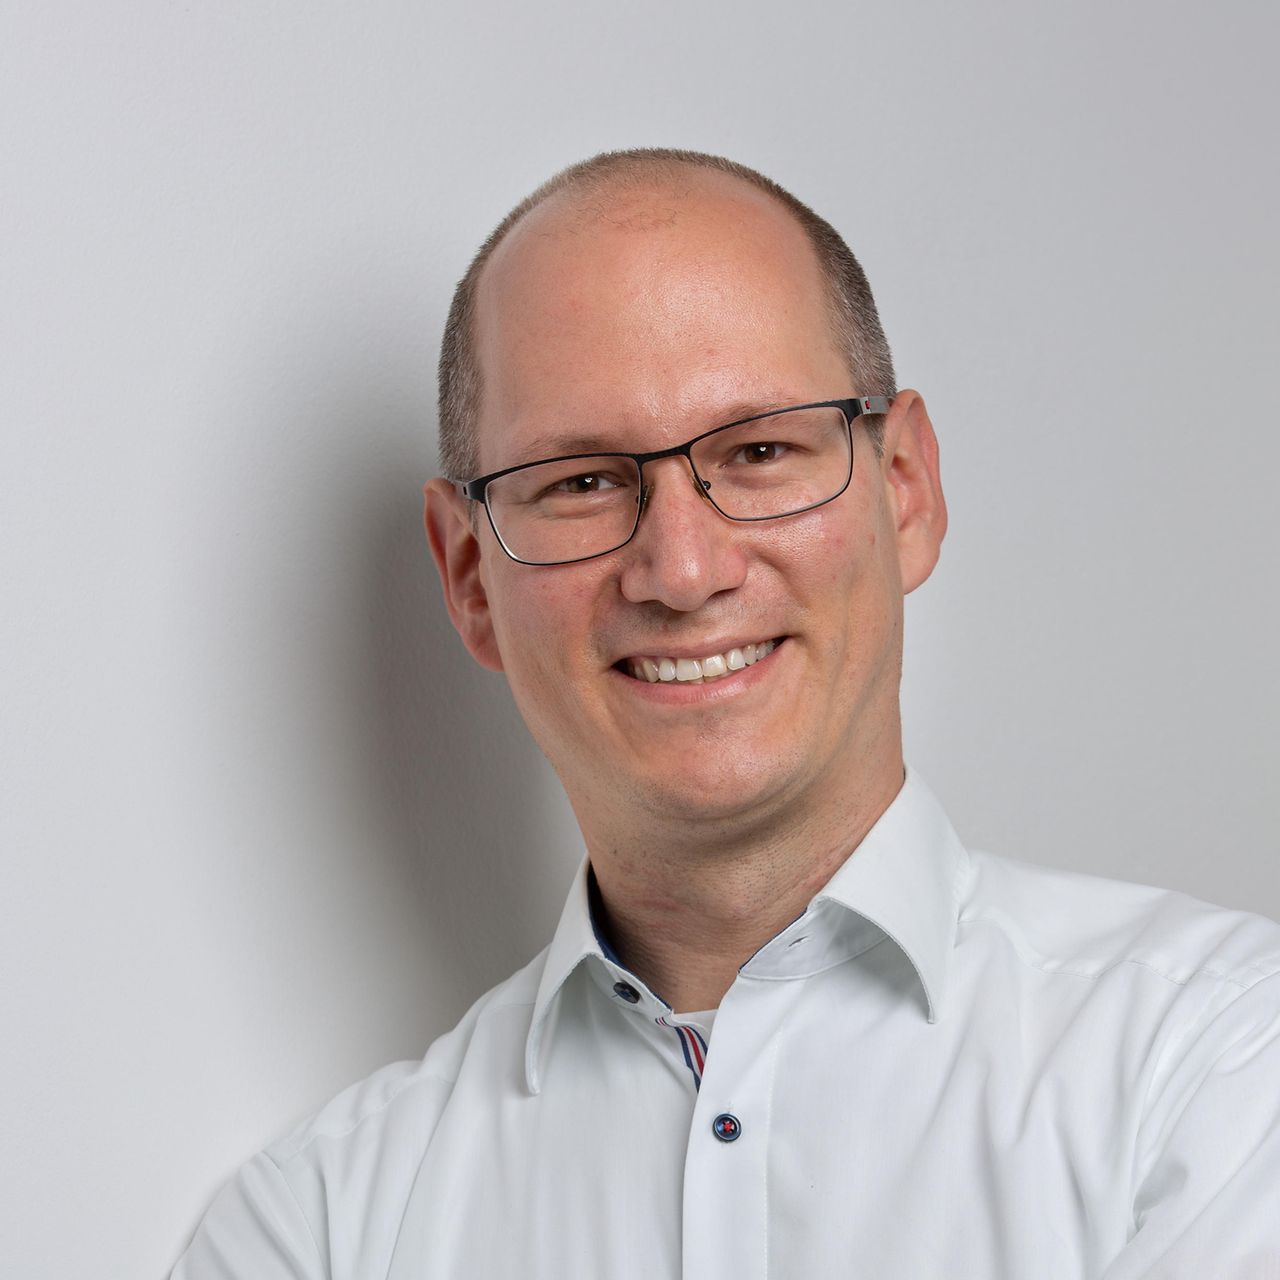 Patrick Köhler, Senior Innovation Manager